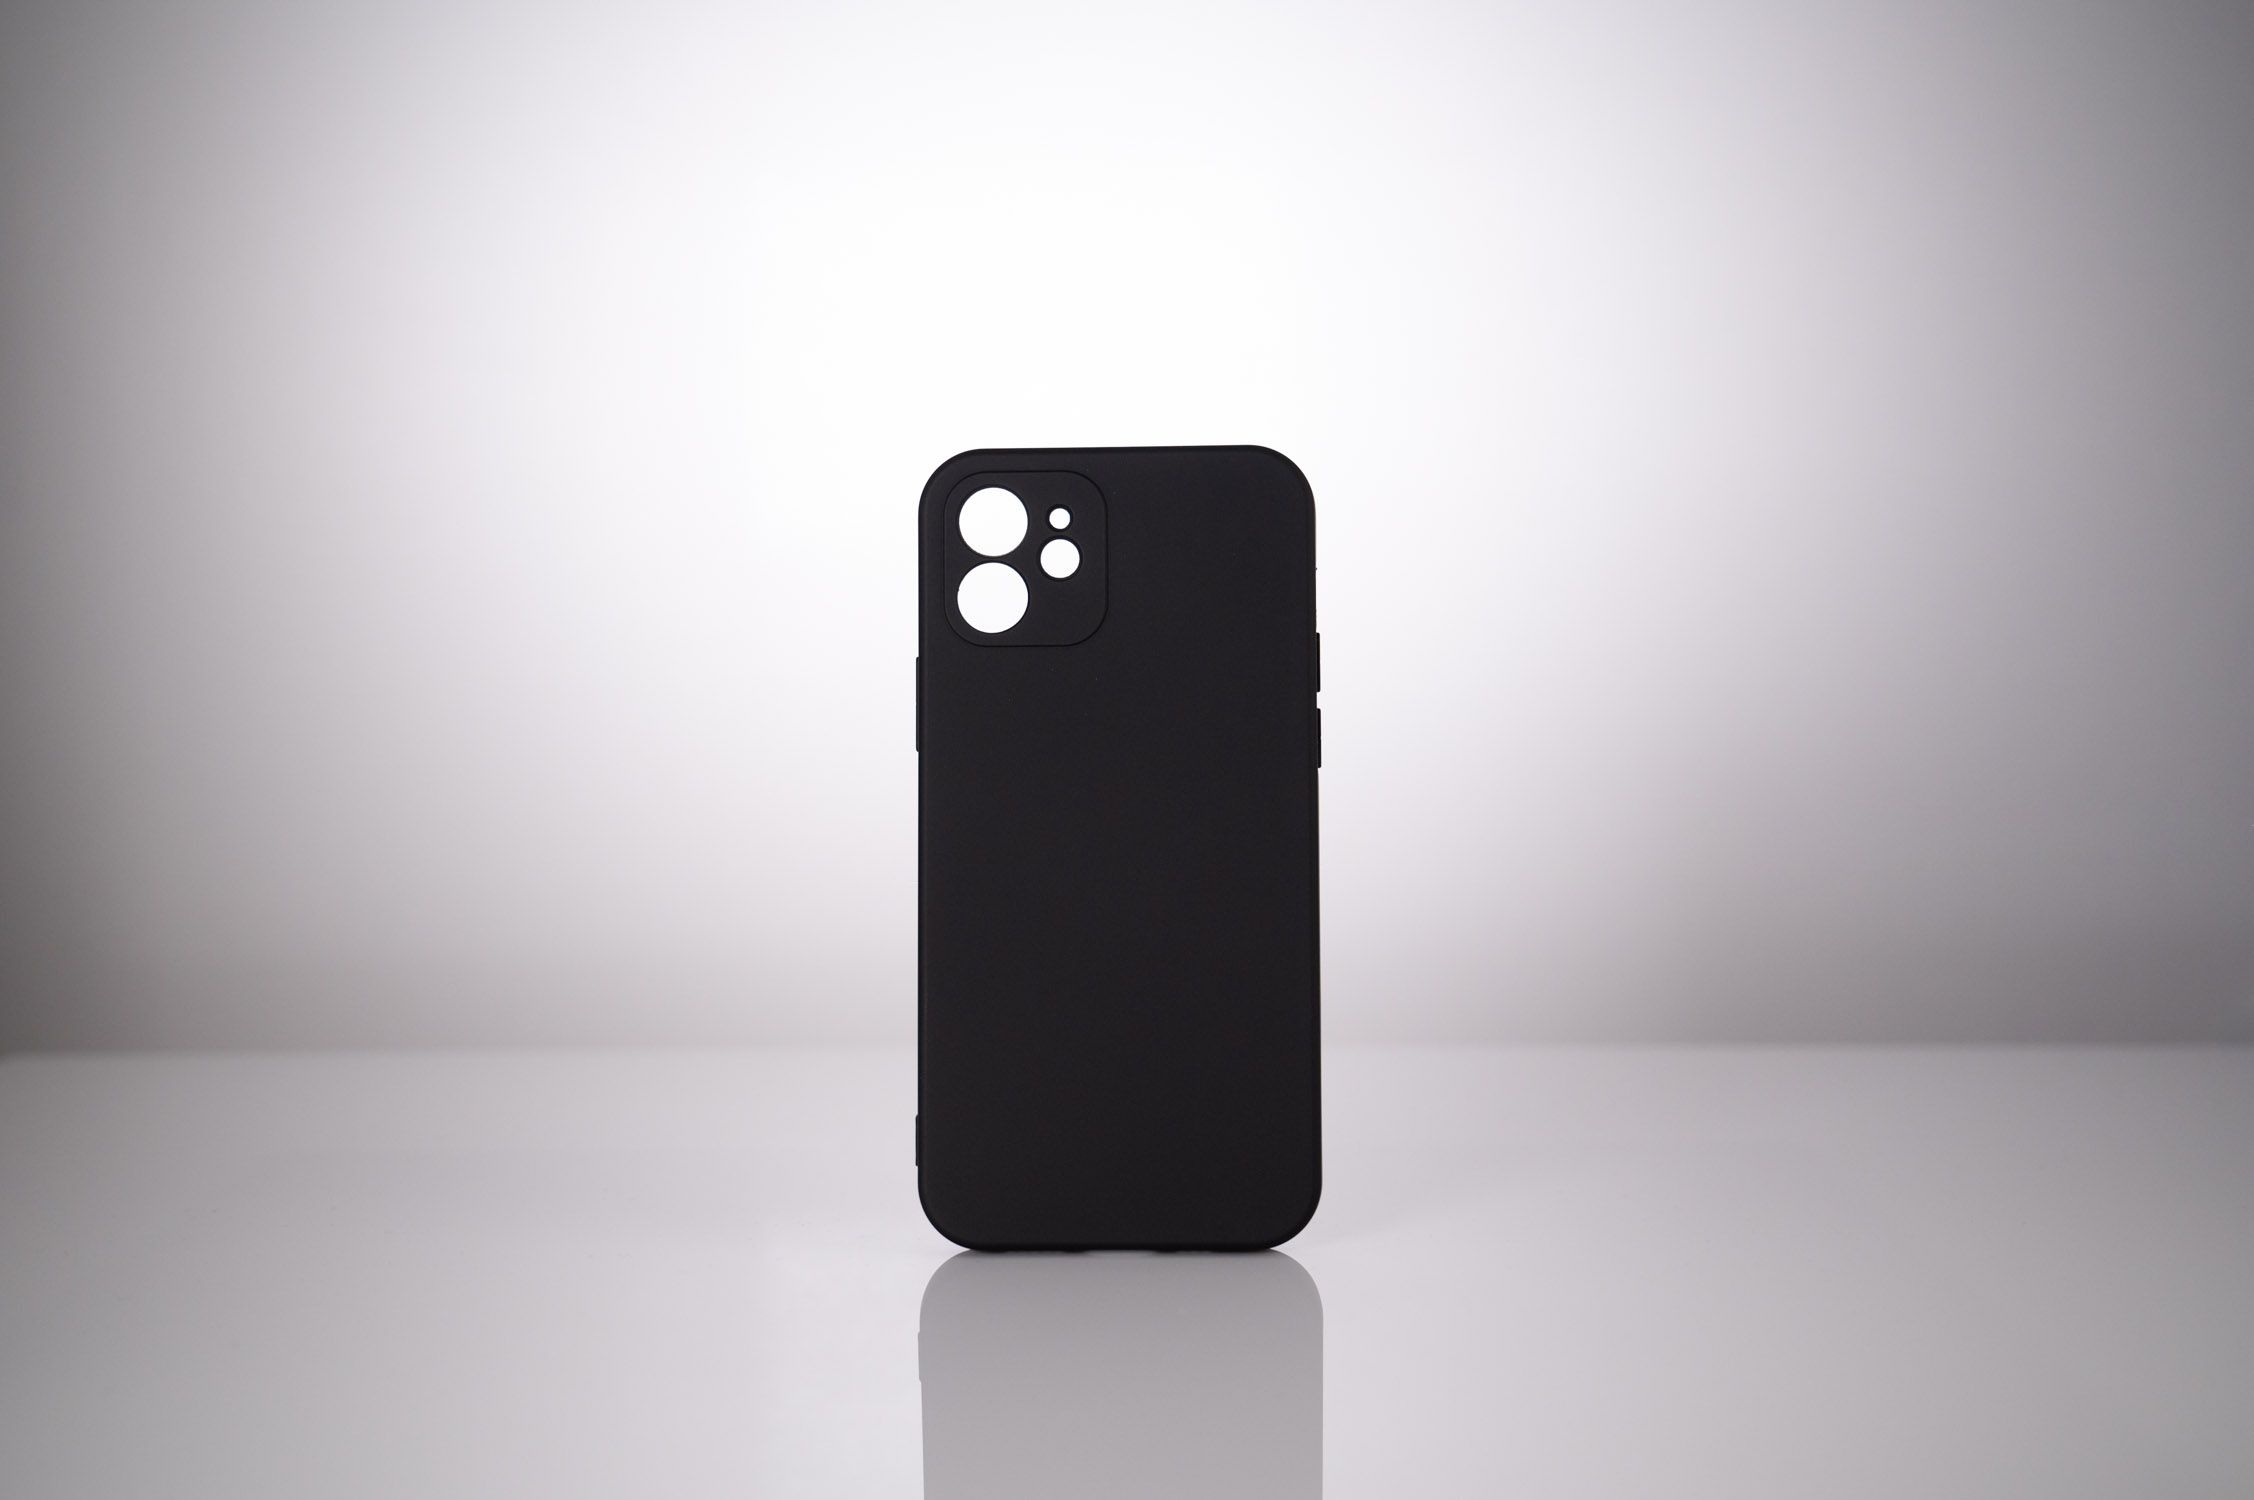 HUSA SMARTPHONE Spacer pentru Iphone 13 Mini, grosime 1.5mm, protectie suplimentara antisoc la colturi, material flexibil TPU, transparenta 